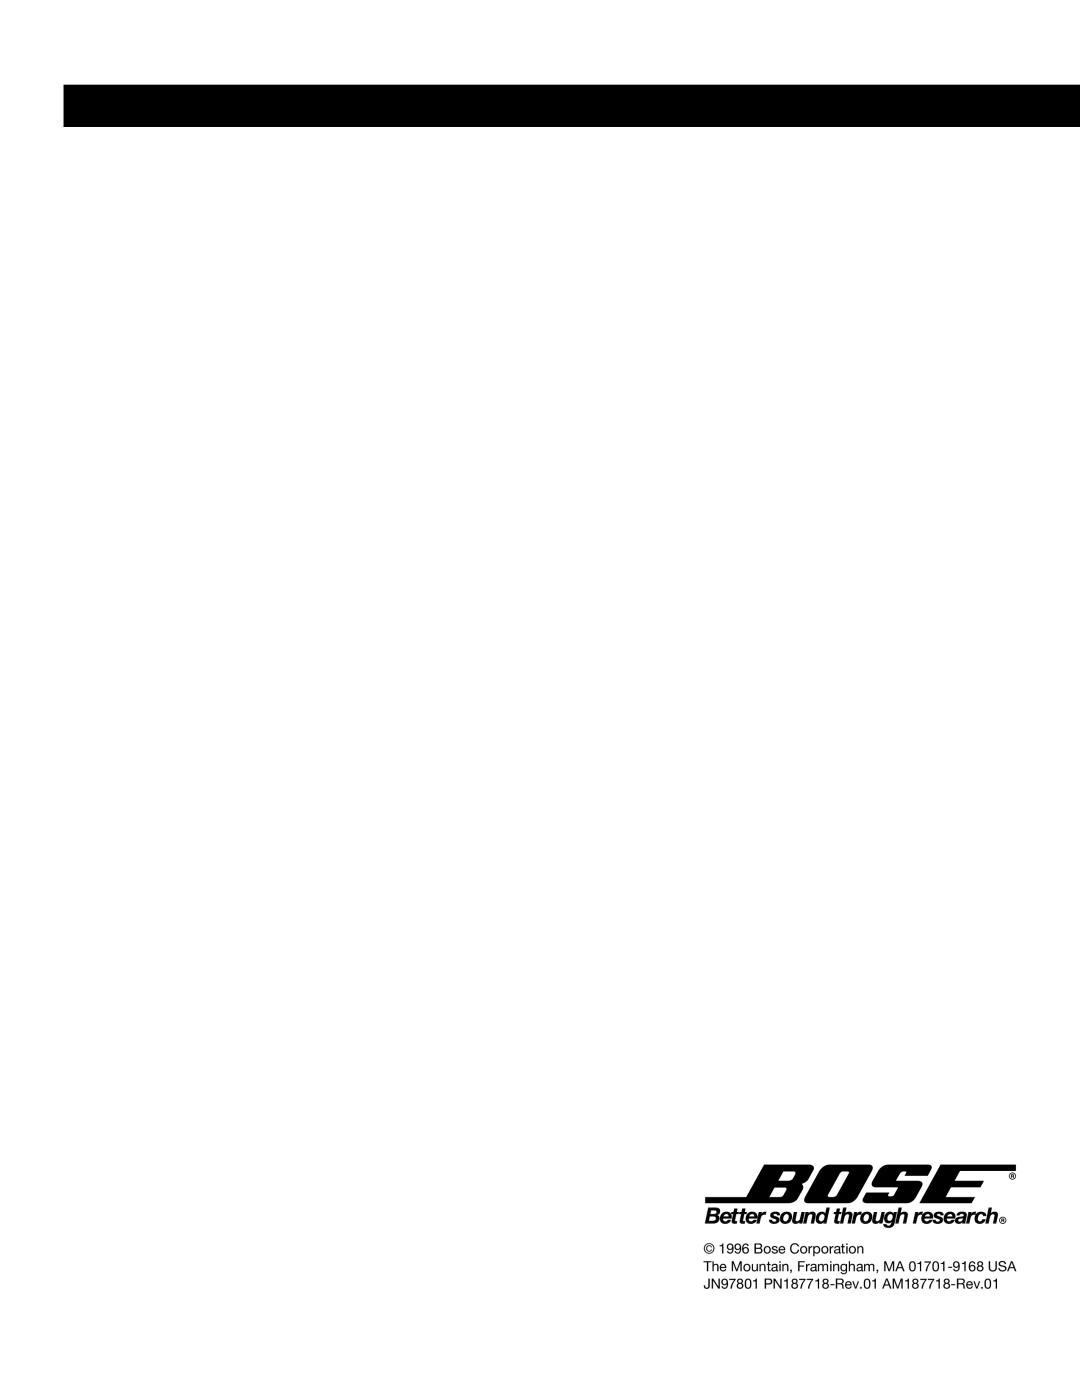 Bose 25 manual 